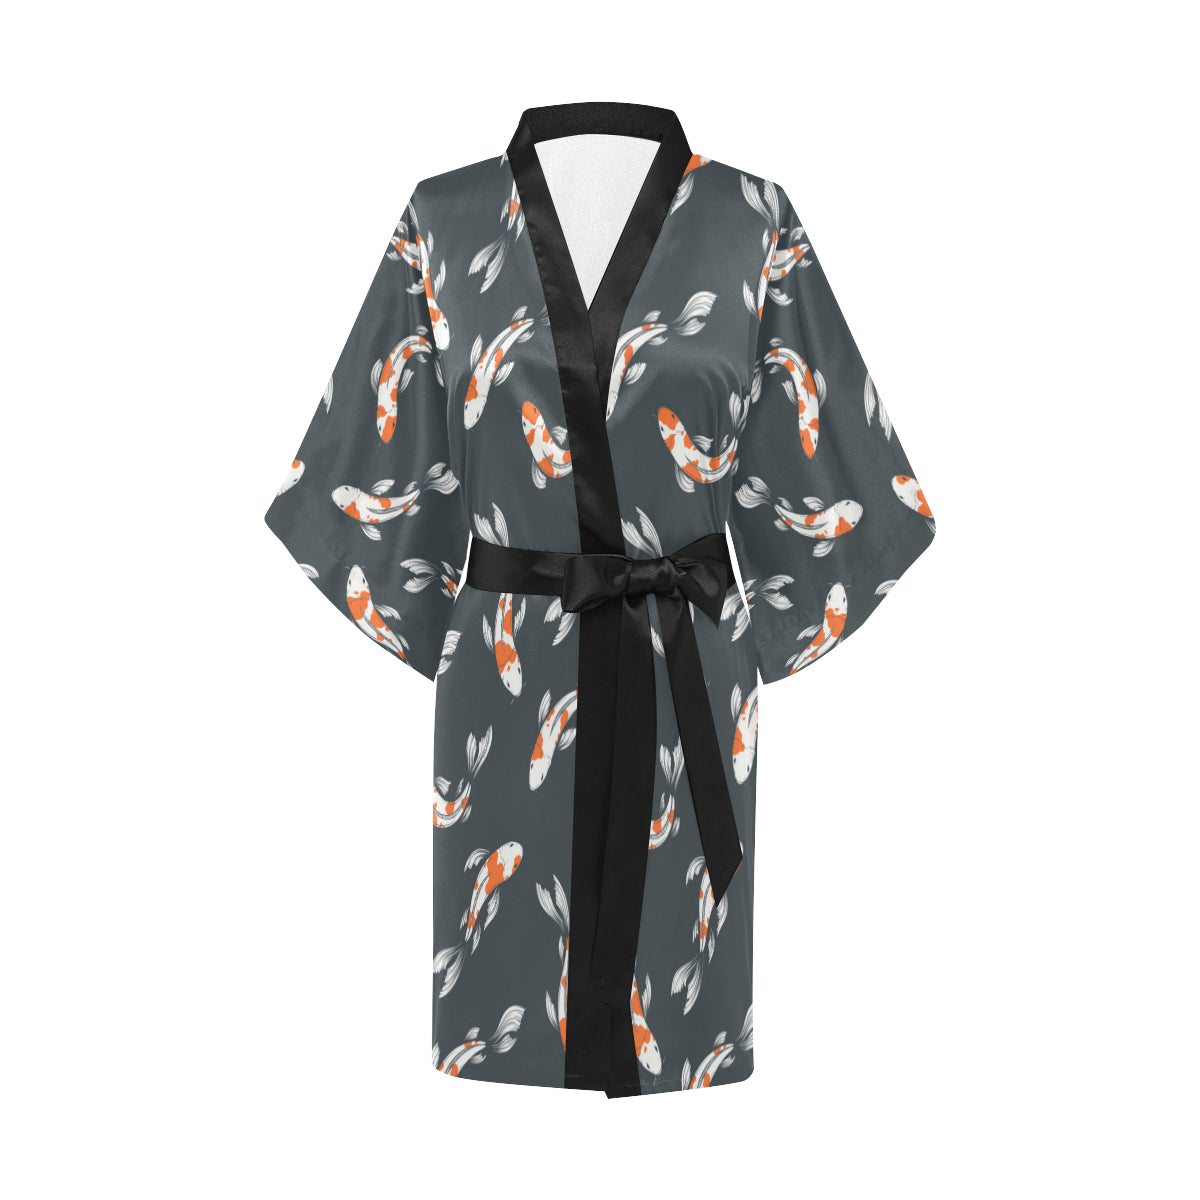 KOI Fish Pattern Print Design 04 Women's Short Kimono